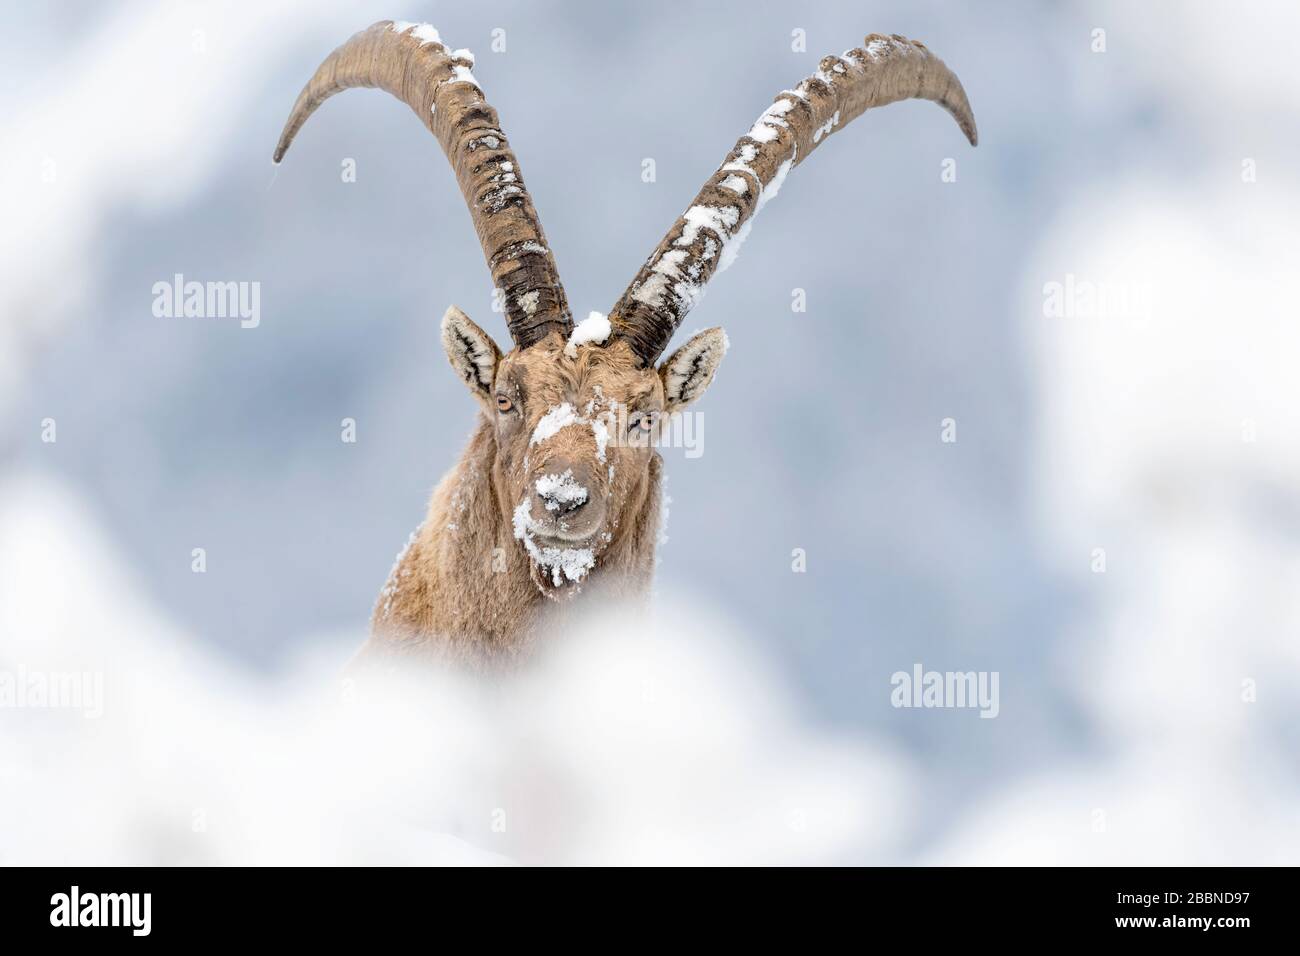 The King of the Alps mountains (Capra ibex) Stock Photo